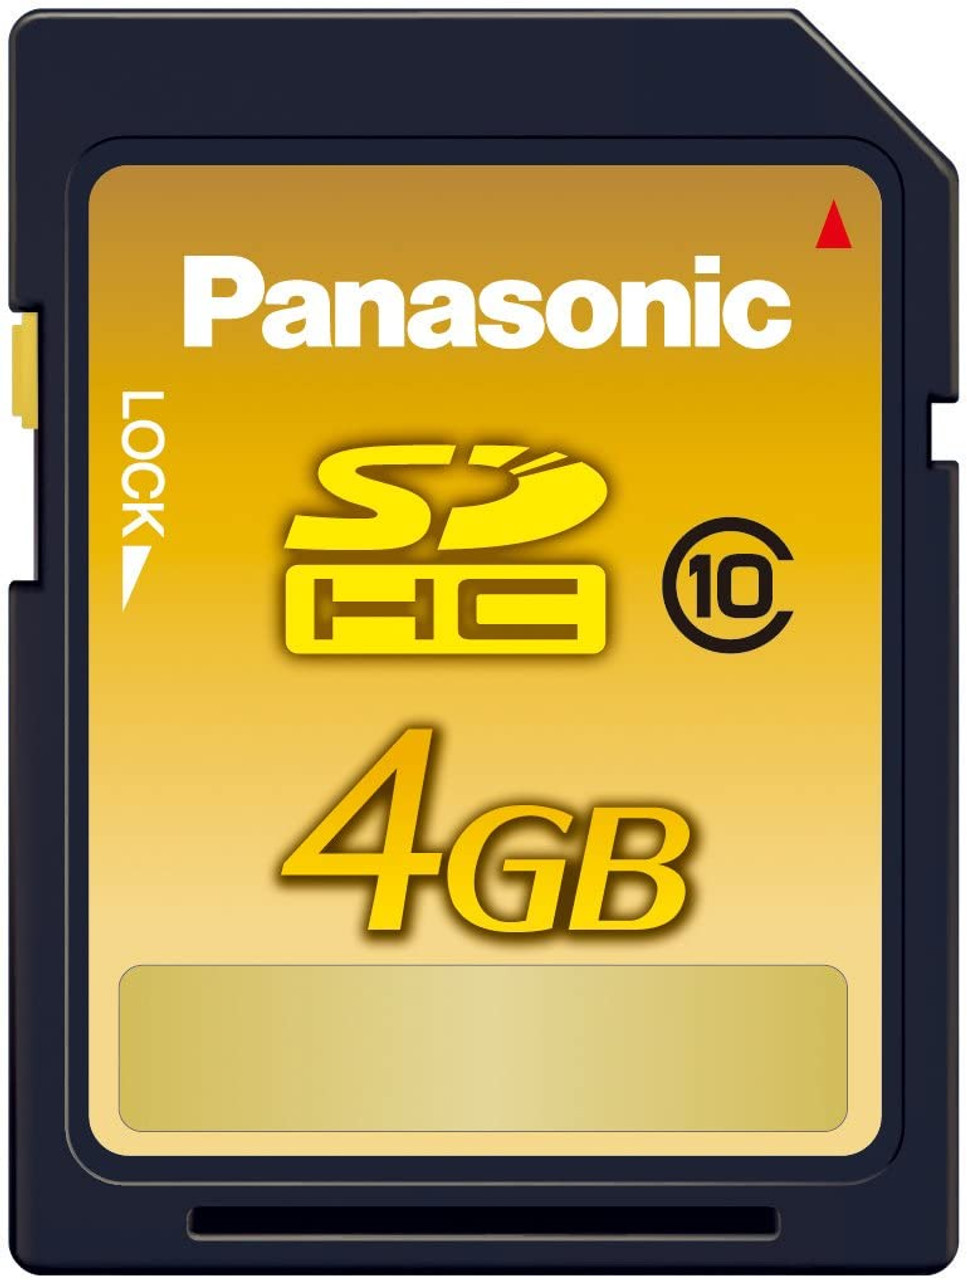 Panasonic RP-SDWA04GJK 4GB SDHC Memory Card